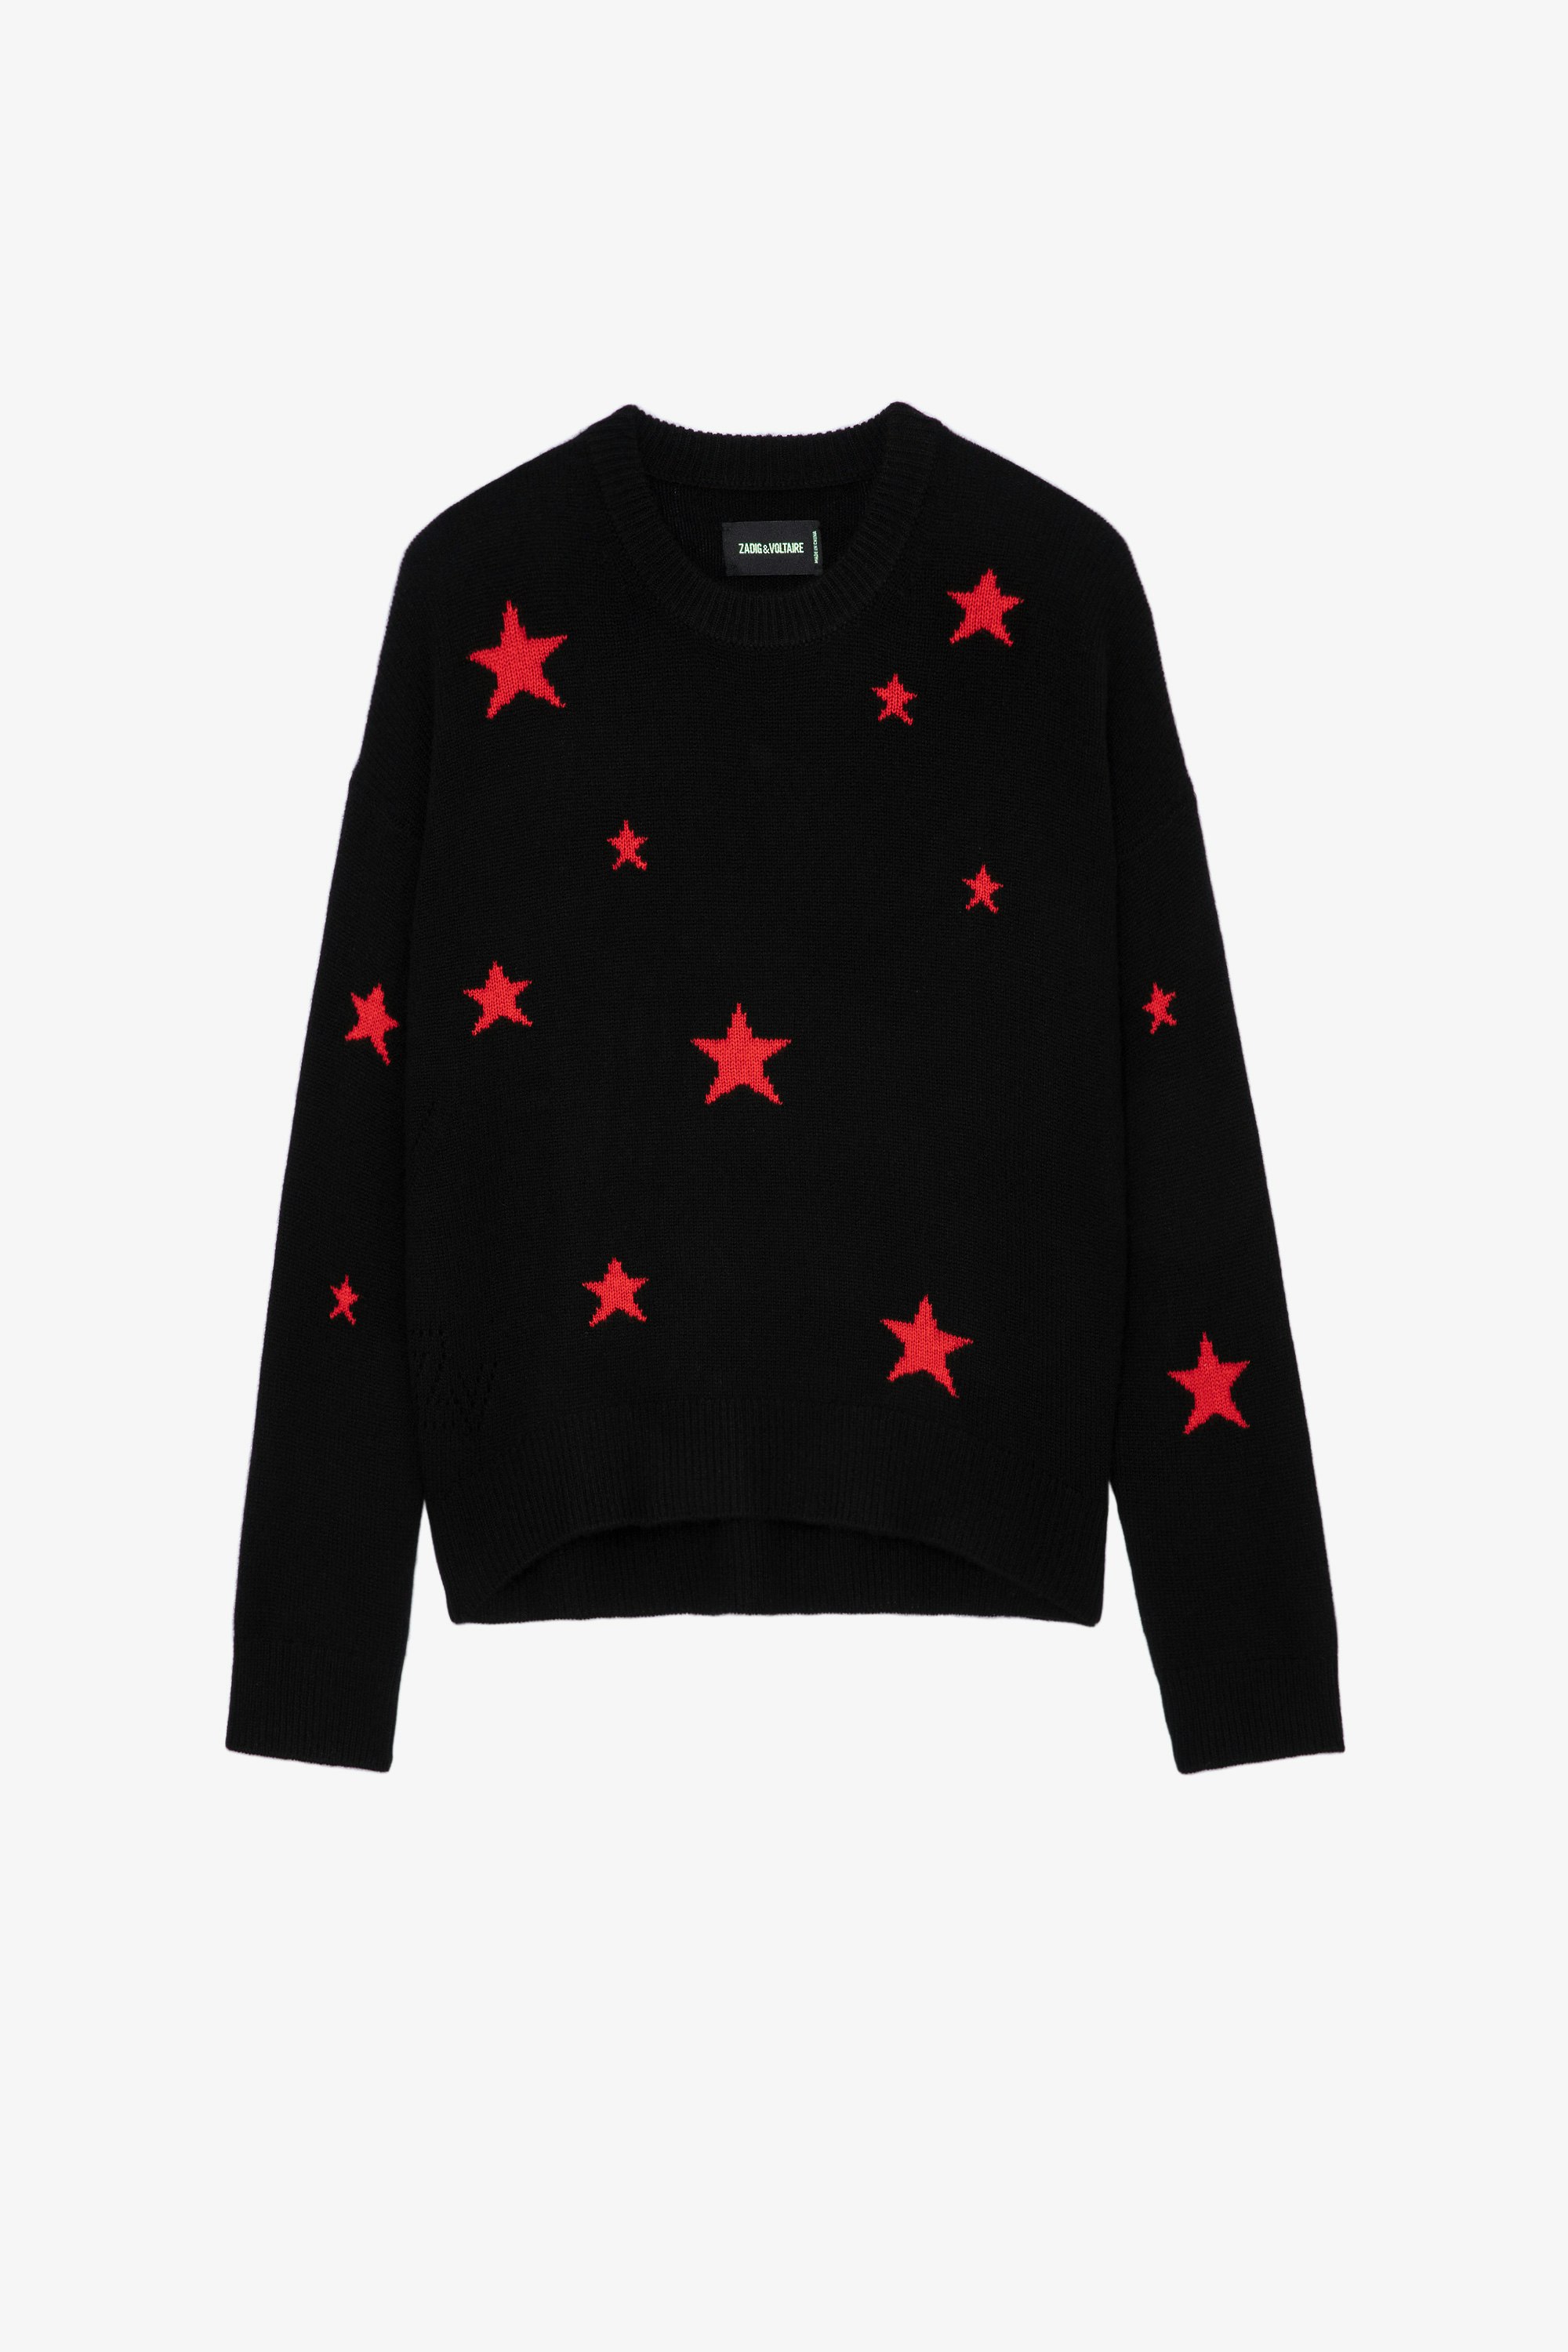 Markus Stars Sweater Cashmere Women's knit jumper with contrasting star motifs
